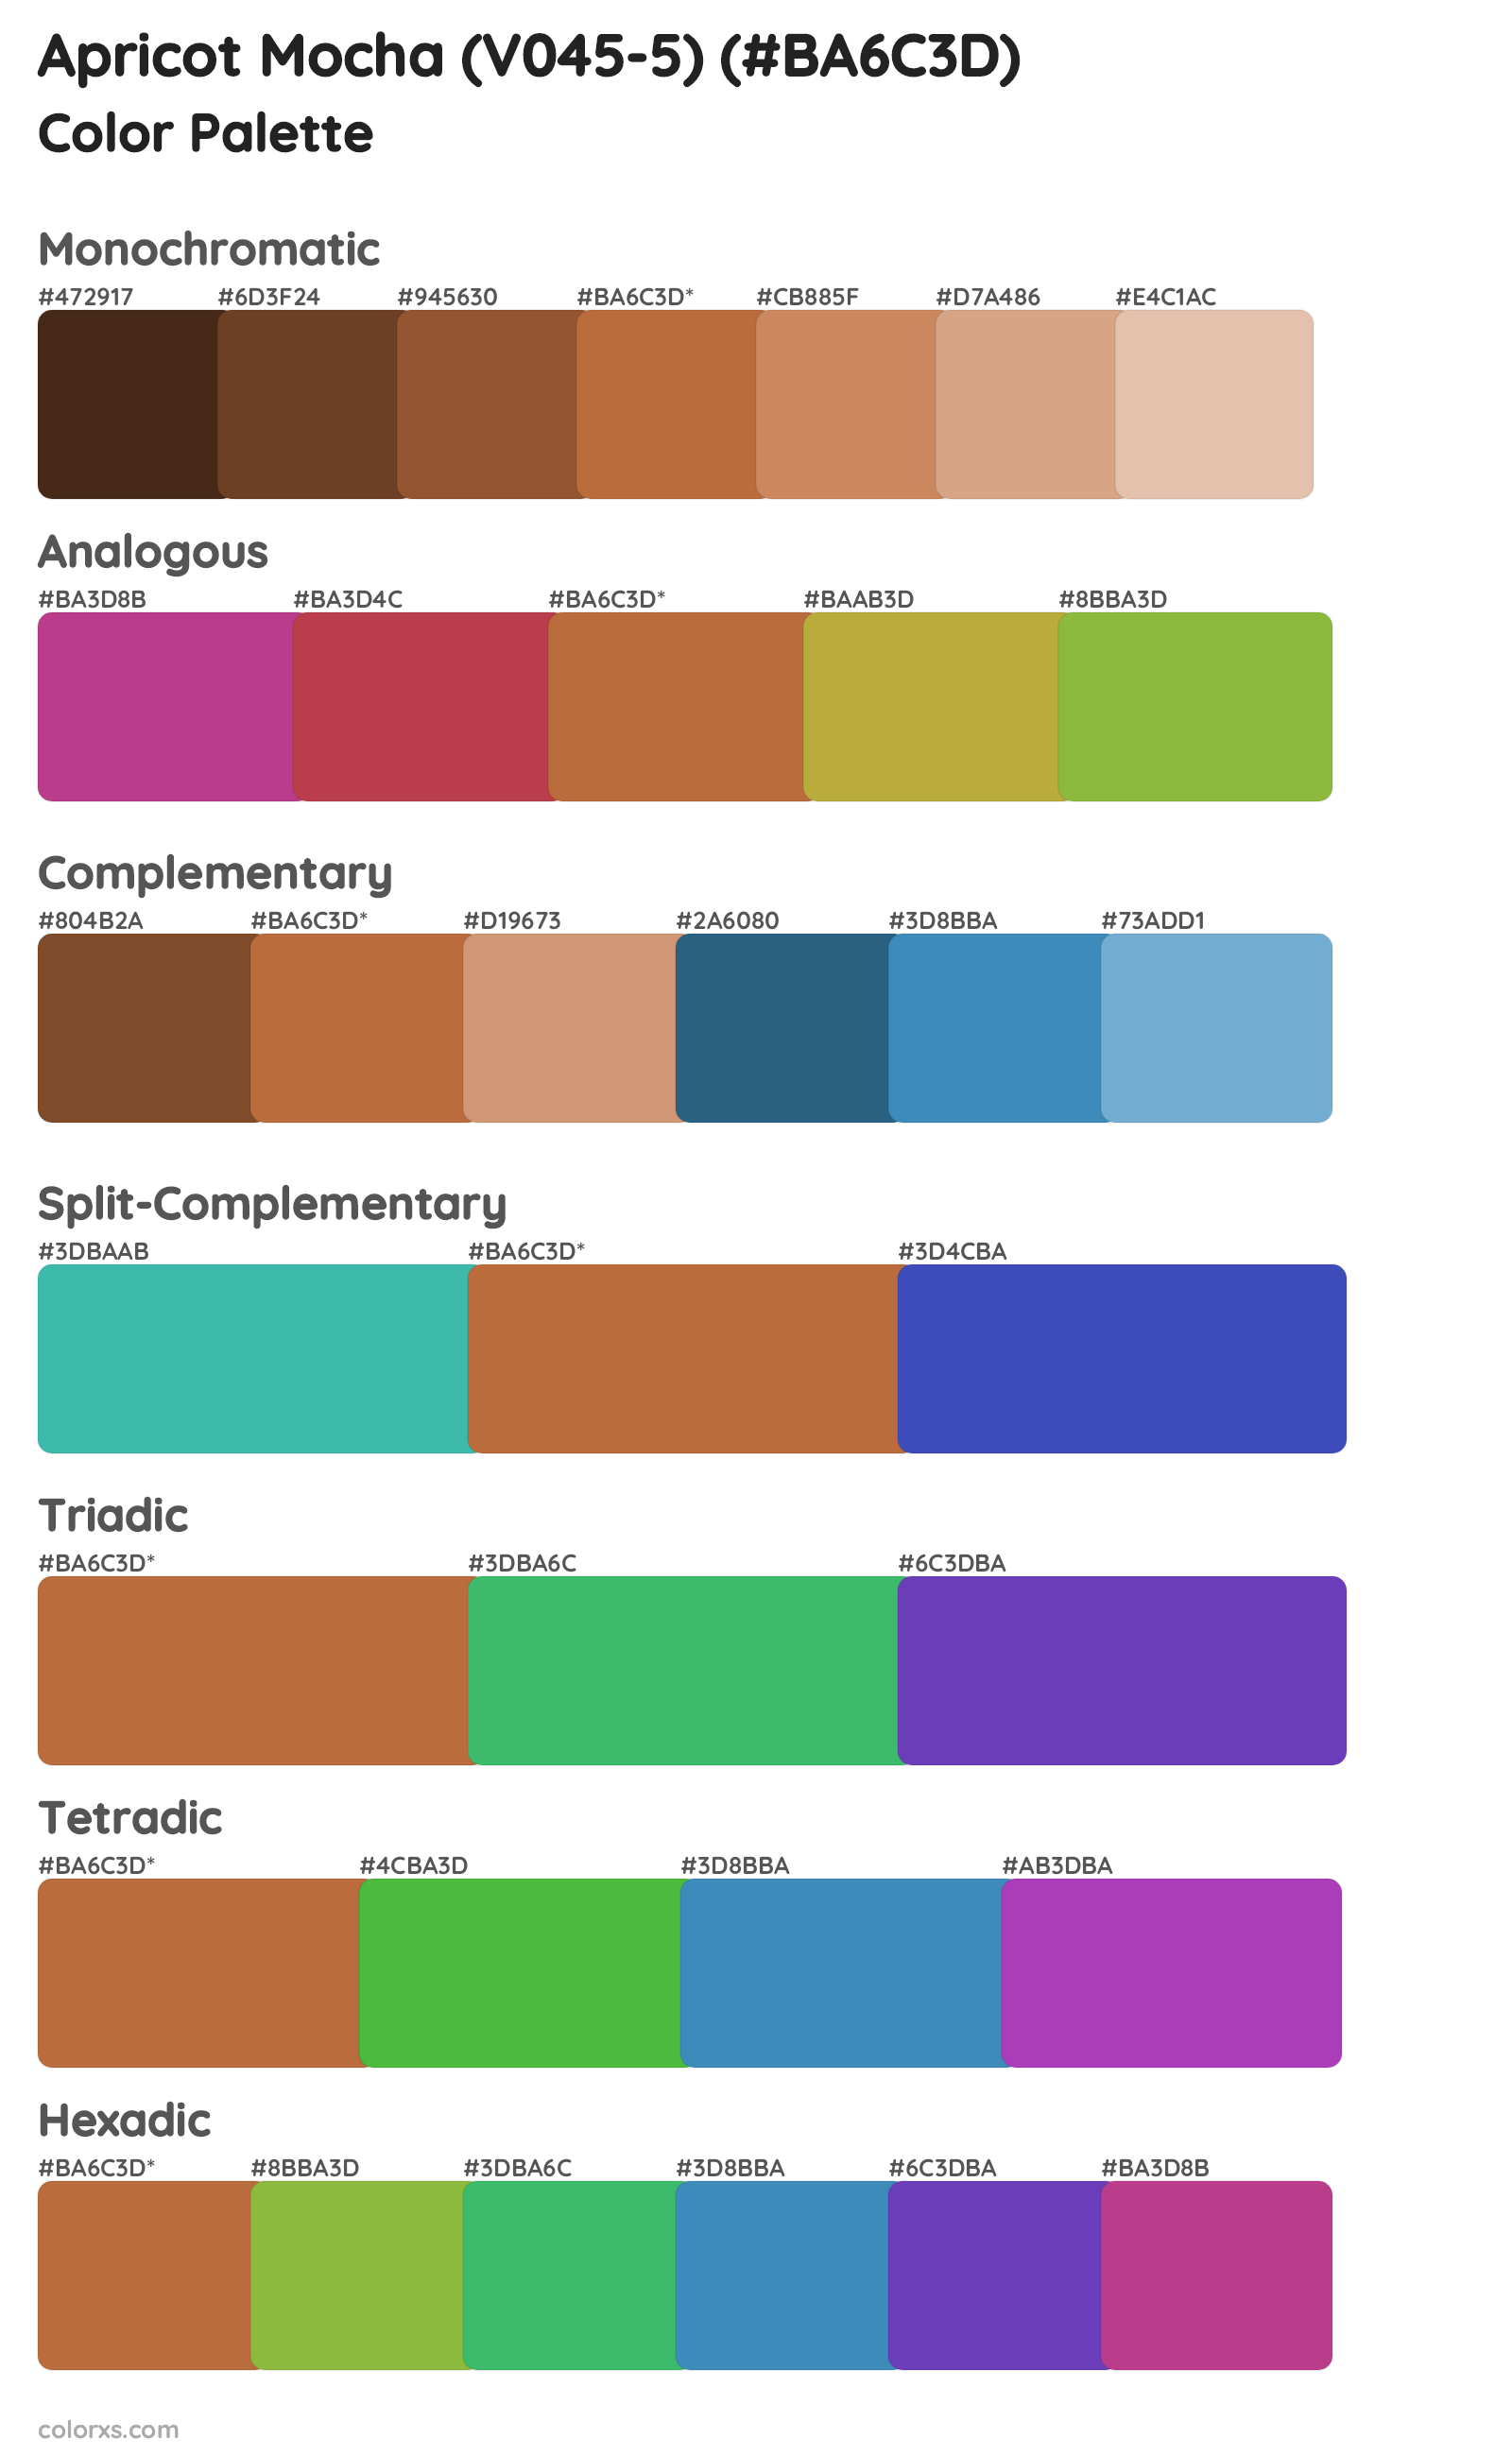 Apricot Mocha (V045-5) Color Scheme Palettes